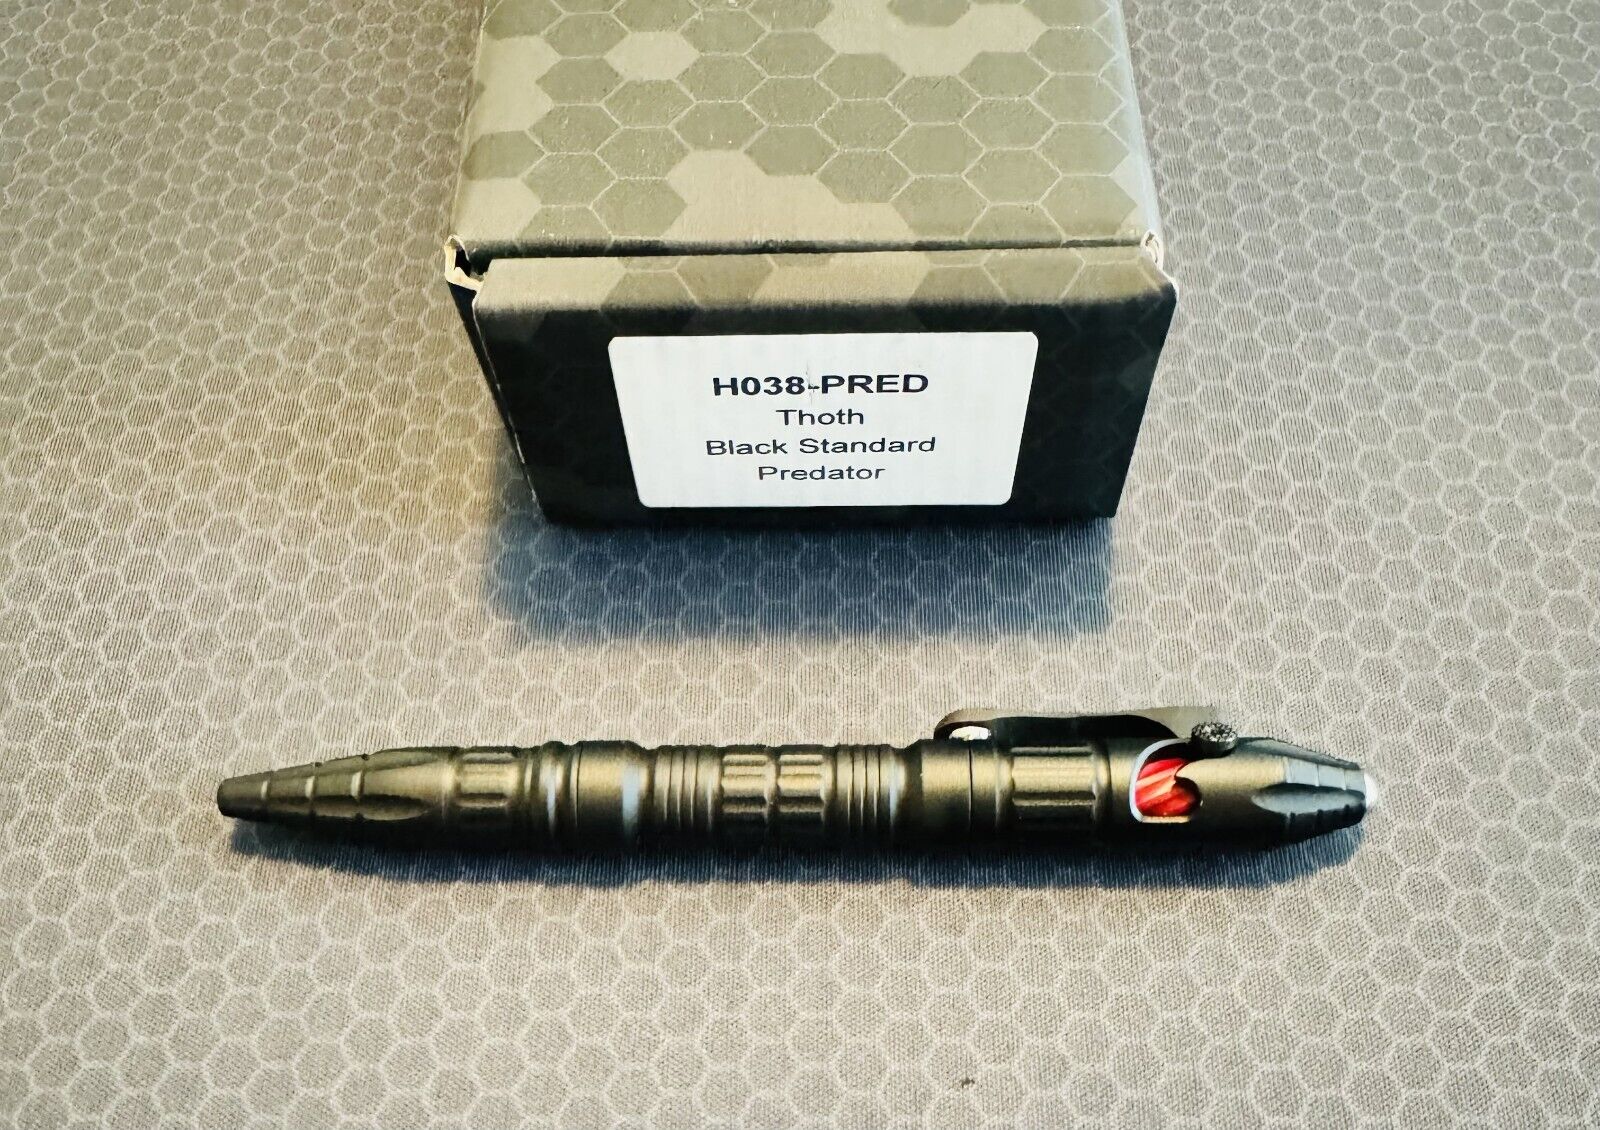 Heretic Knives Thoth - Predator Pen H038-PRED